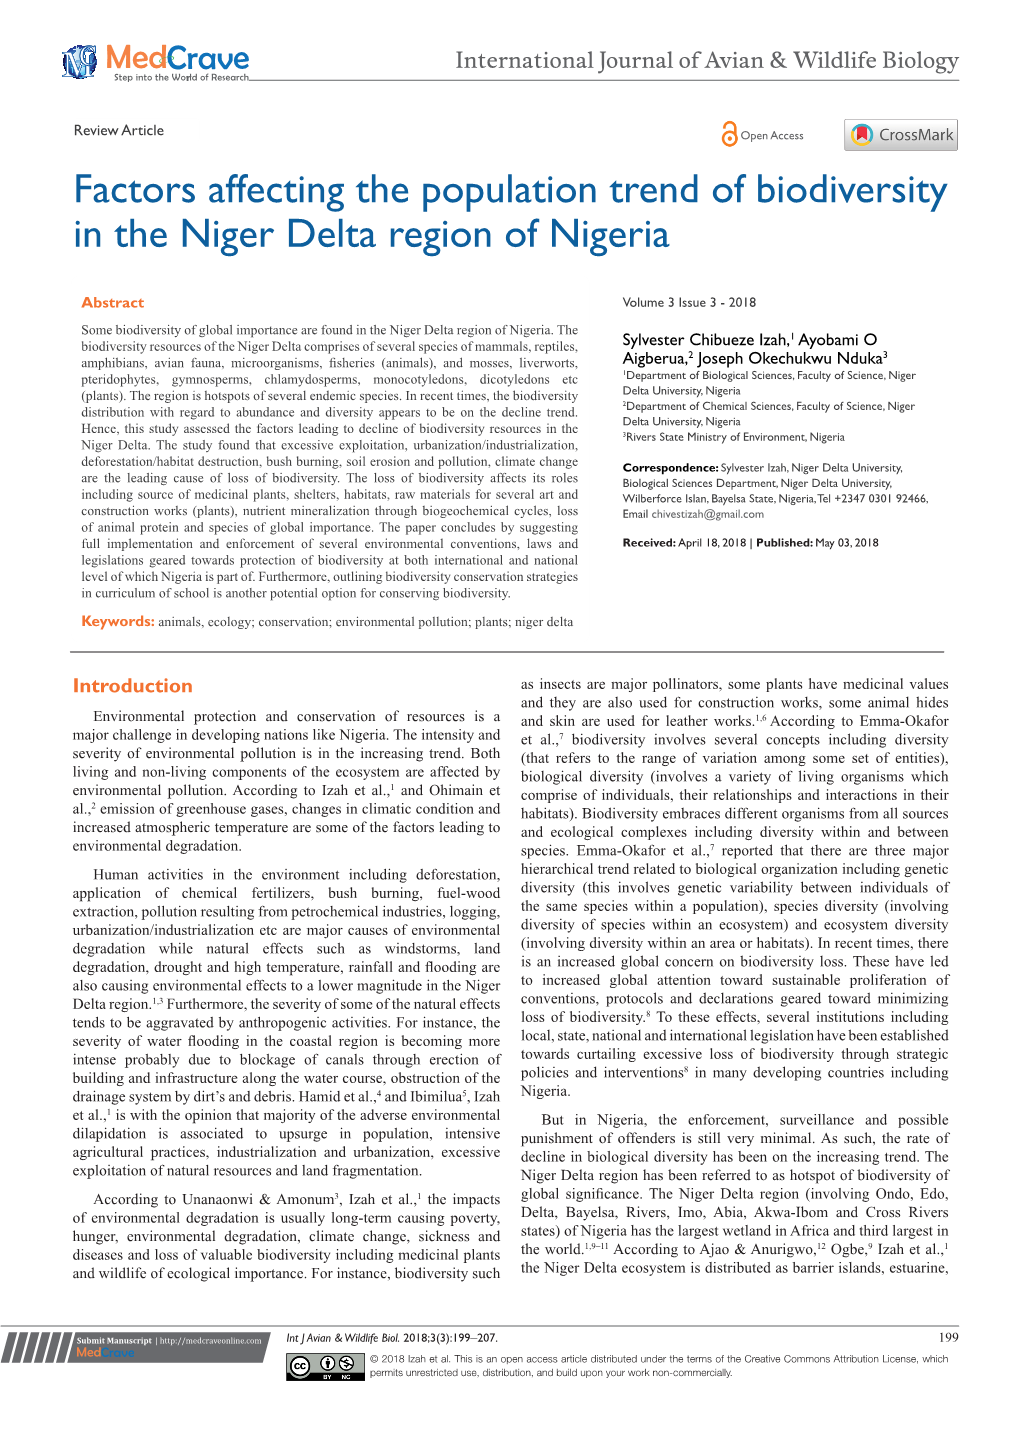 Factors Affecting the Population Trend of Biodiversity in the Niger Delta Region of Nigeria